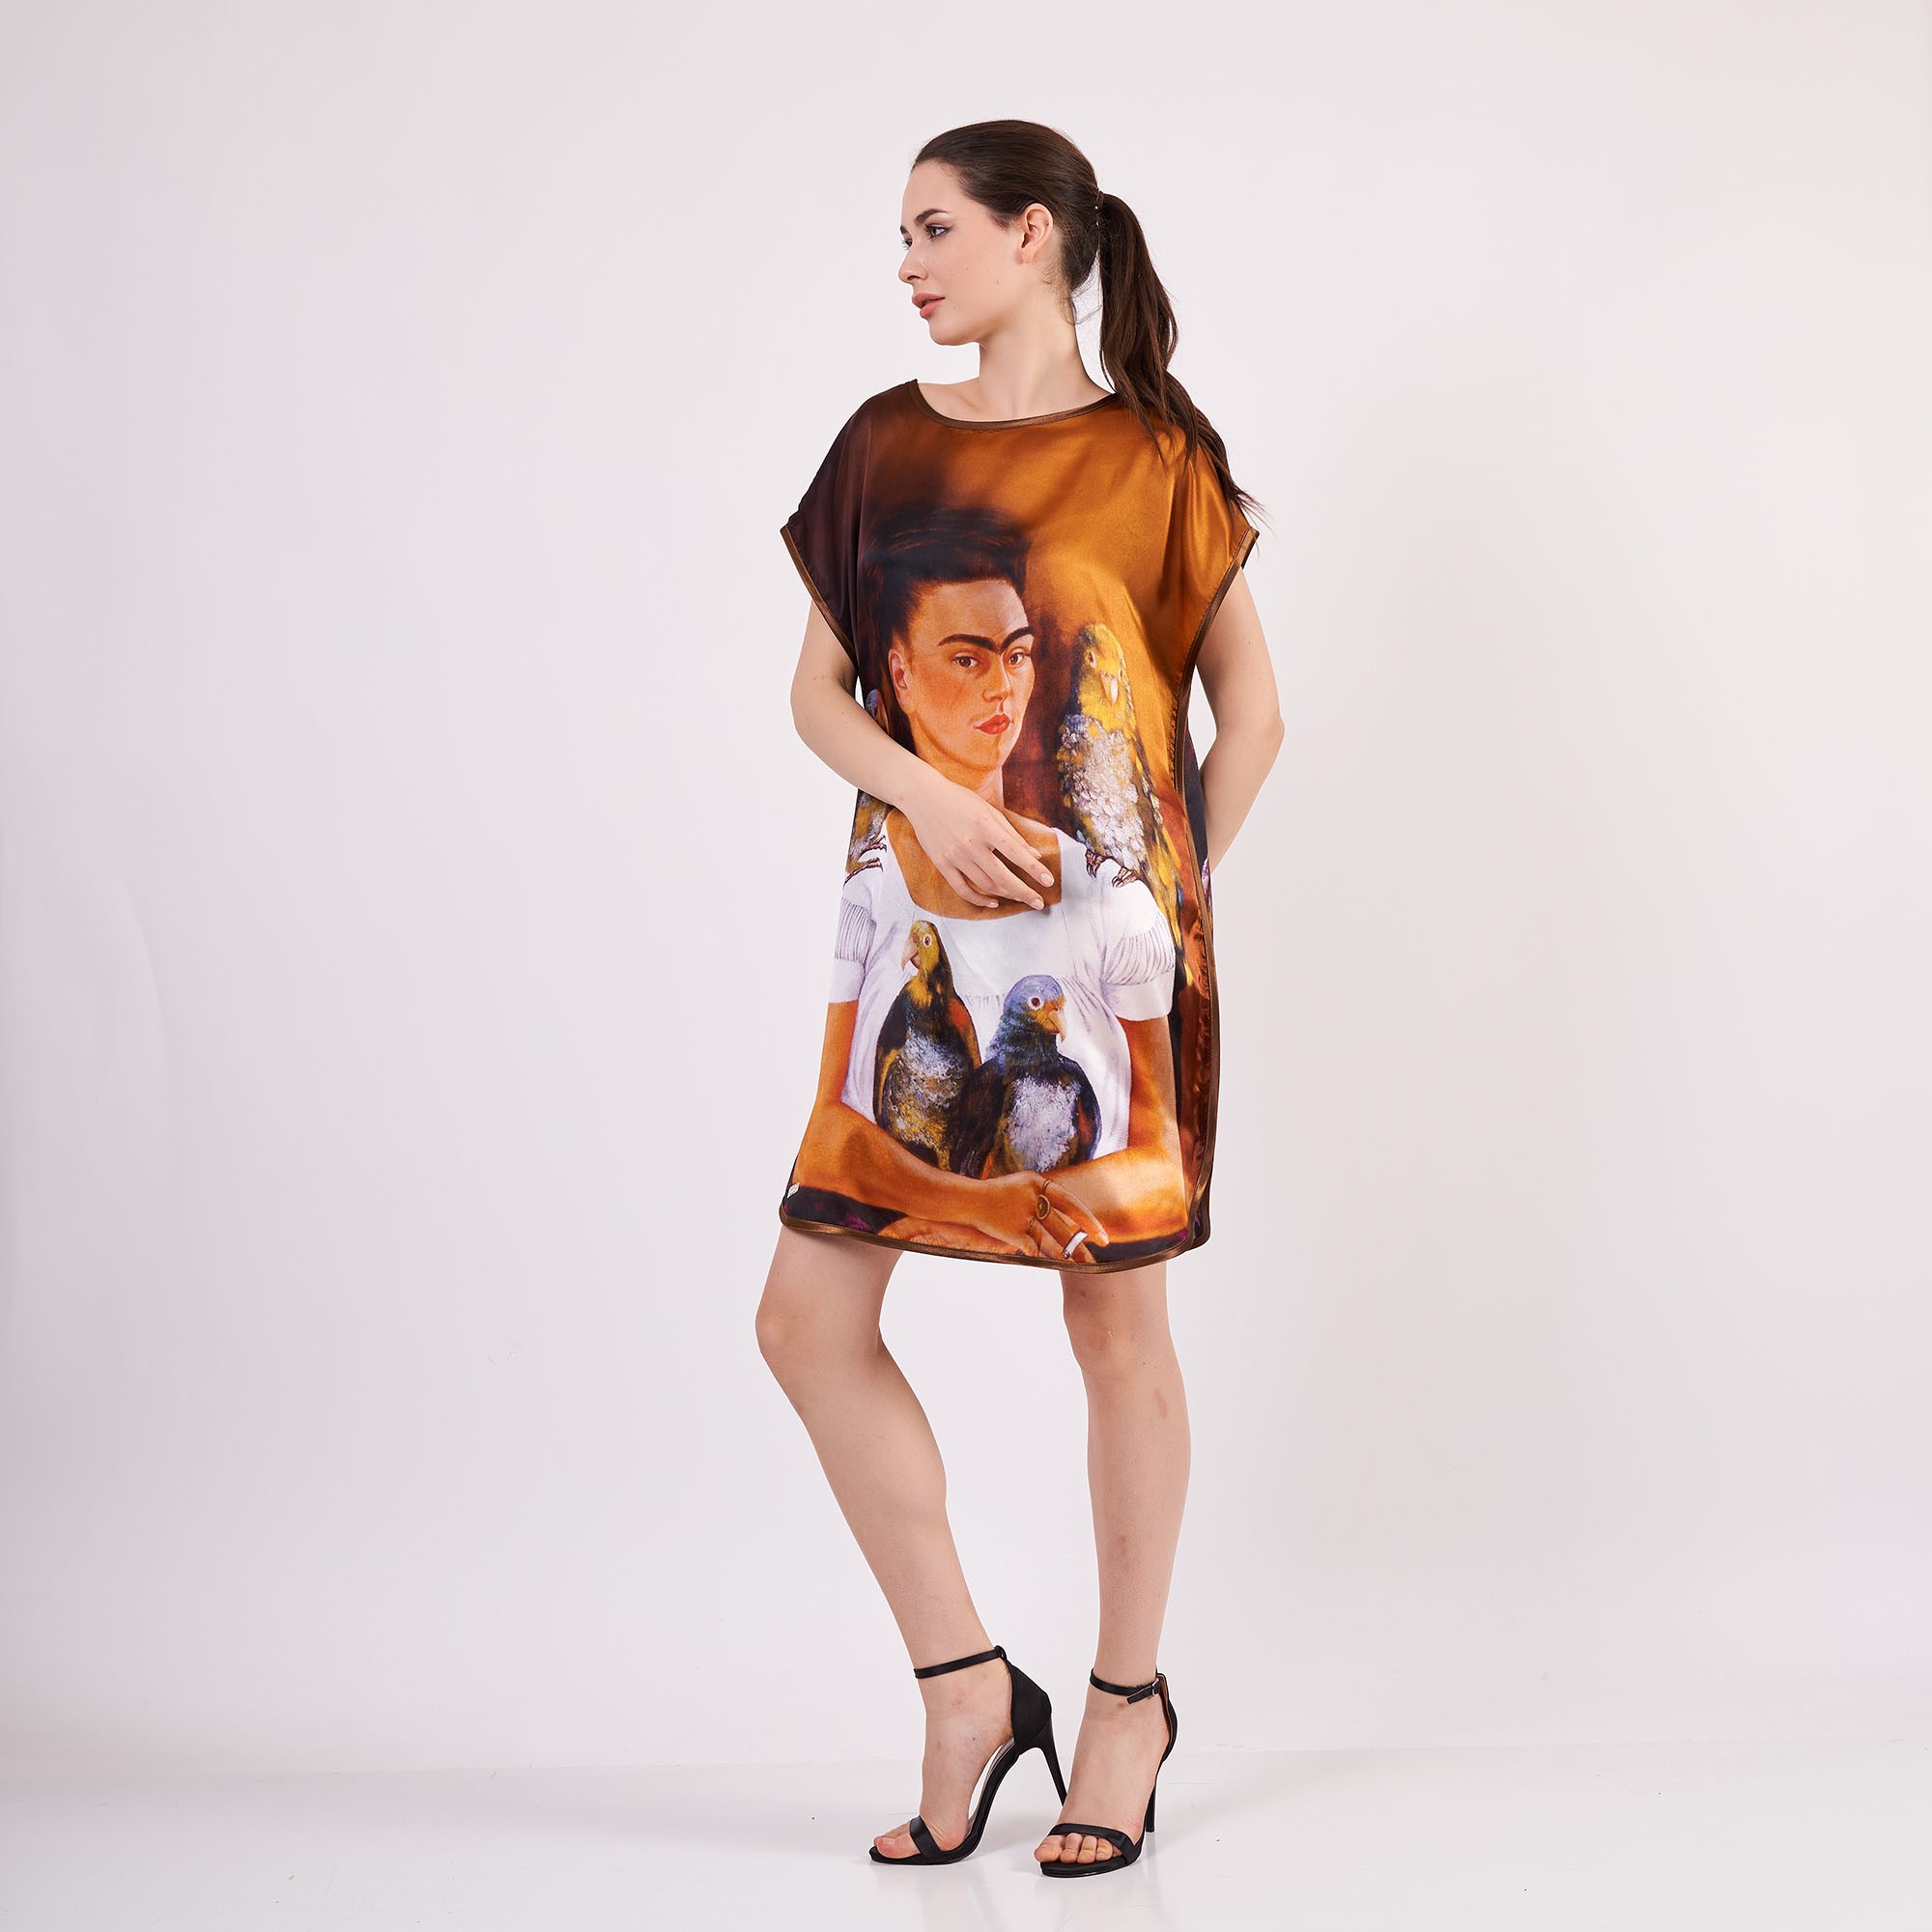 %100 Silk Plus Size Short Dress For Women | Oversized Short Kaftan Frida Kahlo 2 | Loose Fitting Dress